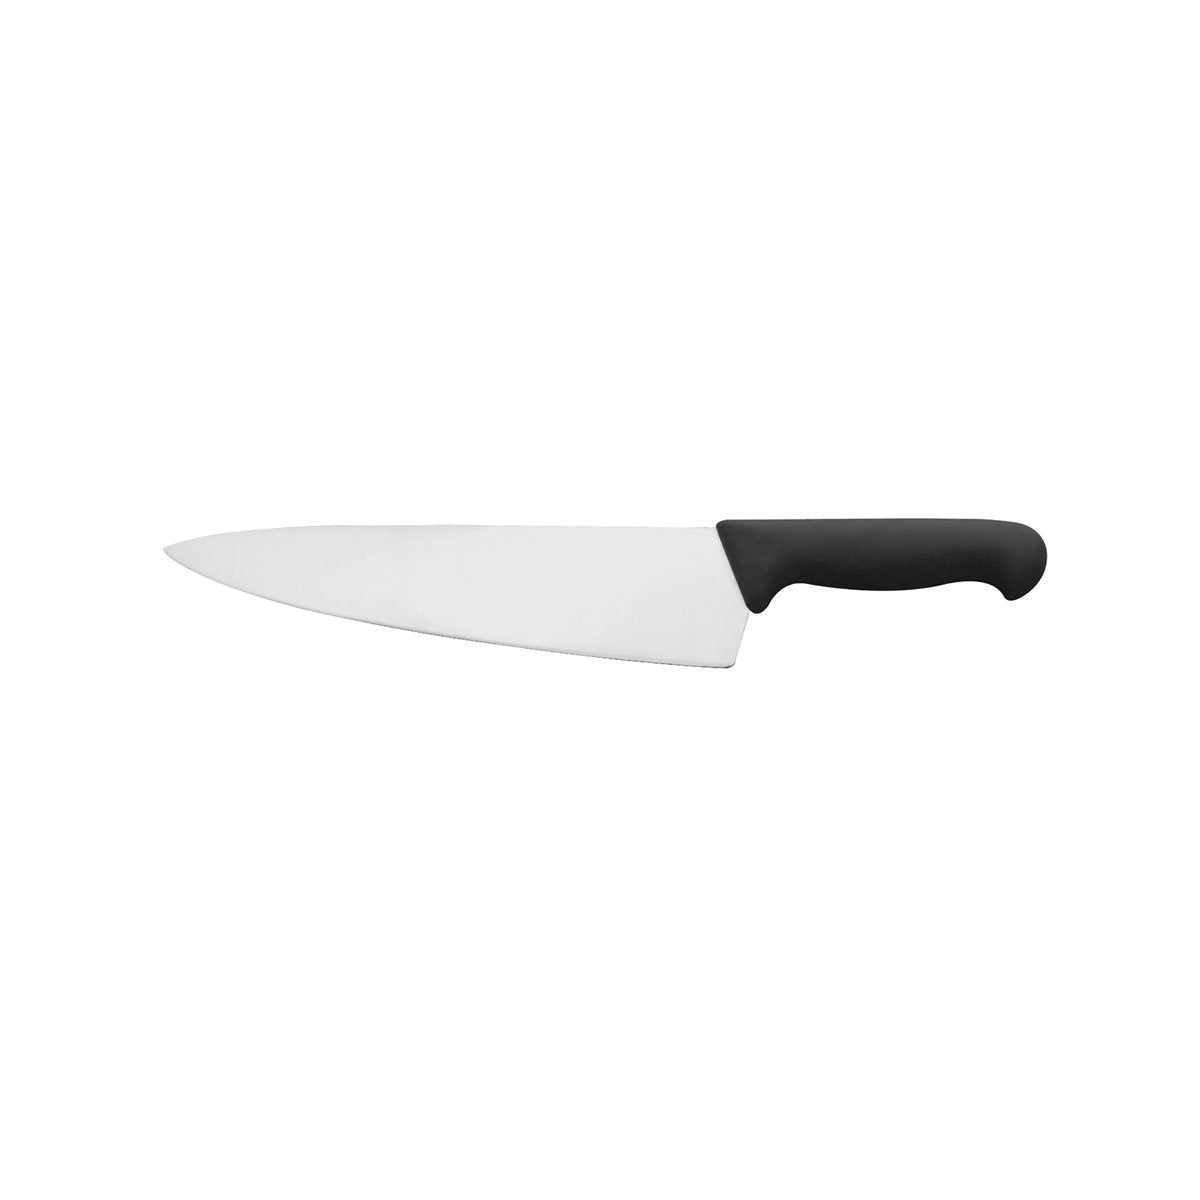 25112 Ivo Professional 55000 Chefs Knife 300mm Tomkin Australia Hospitality Supplies